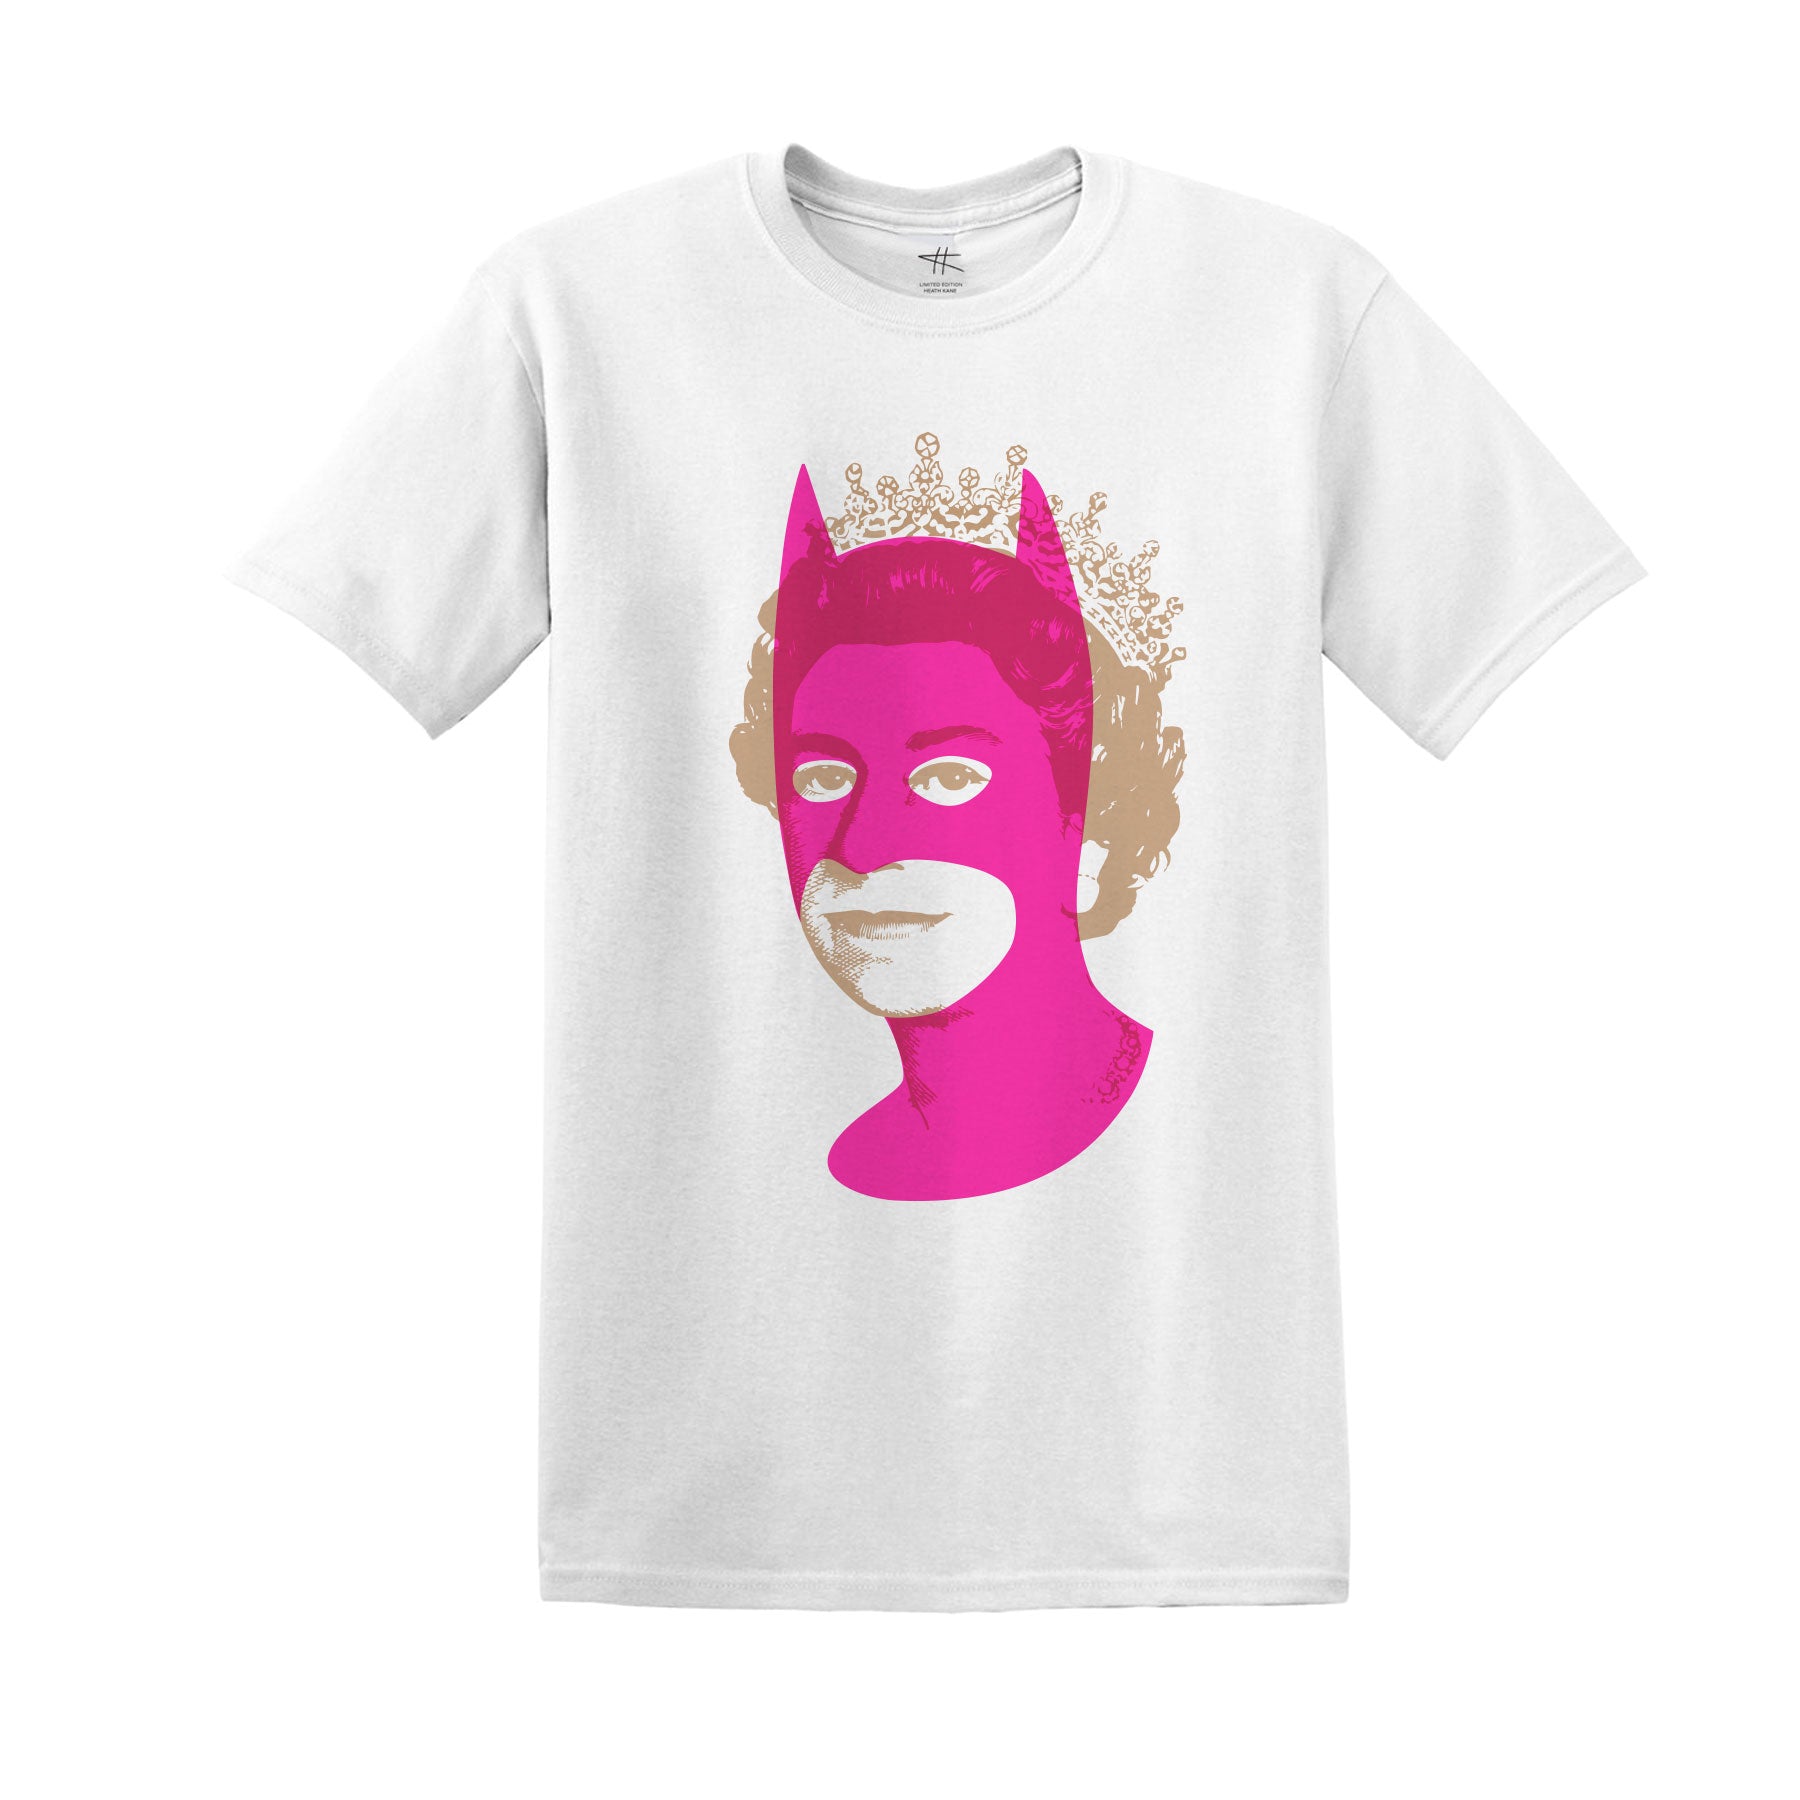 Rich Enough to be Batman - Neon Pink and Gold T-shirt by artist Heath Kane  | Heath Kane